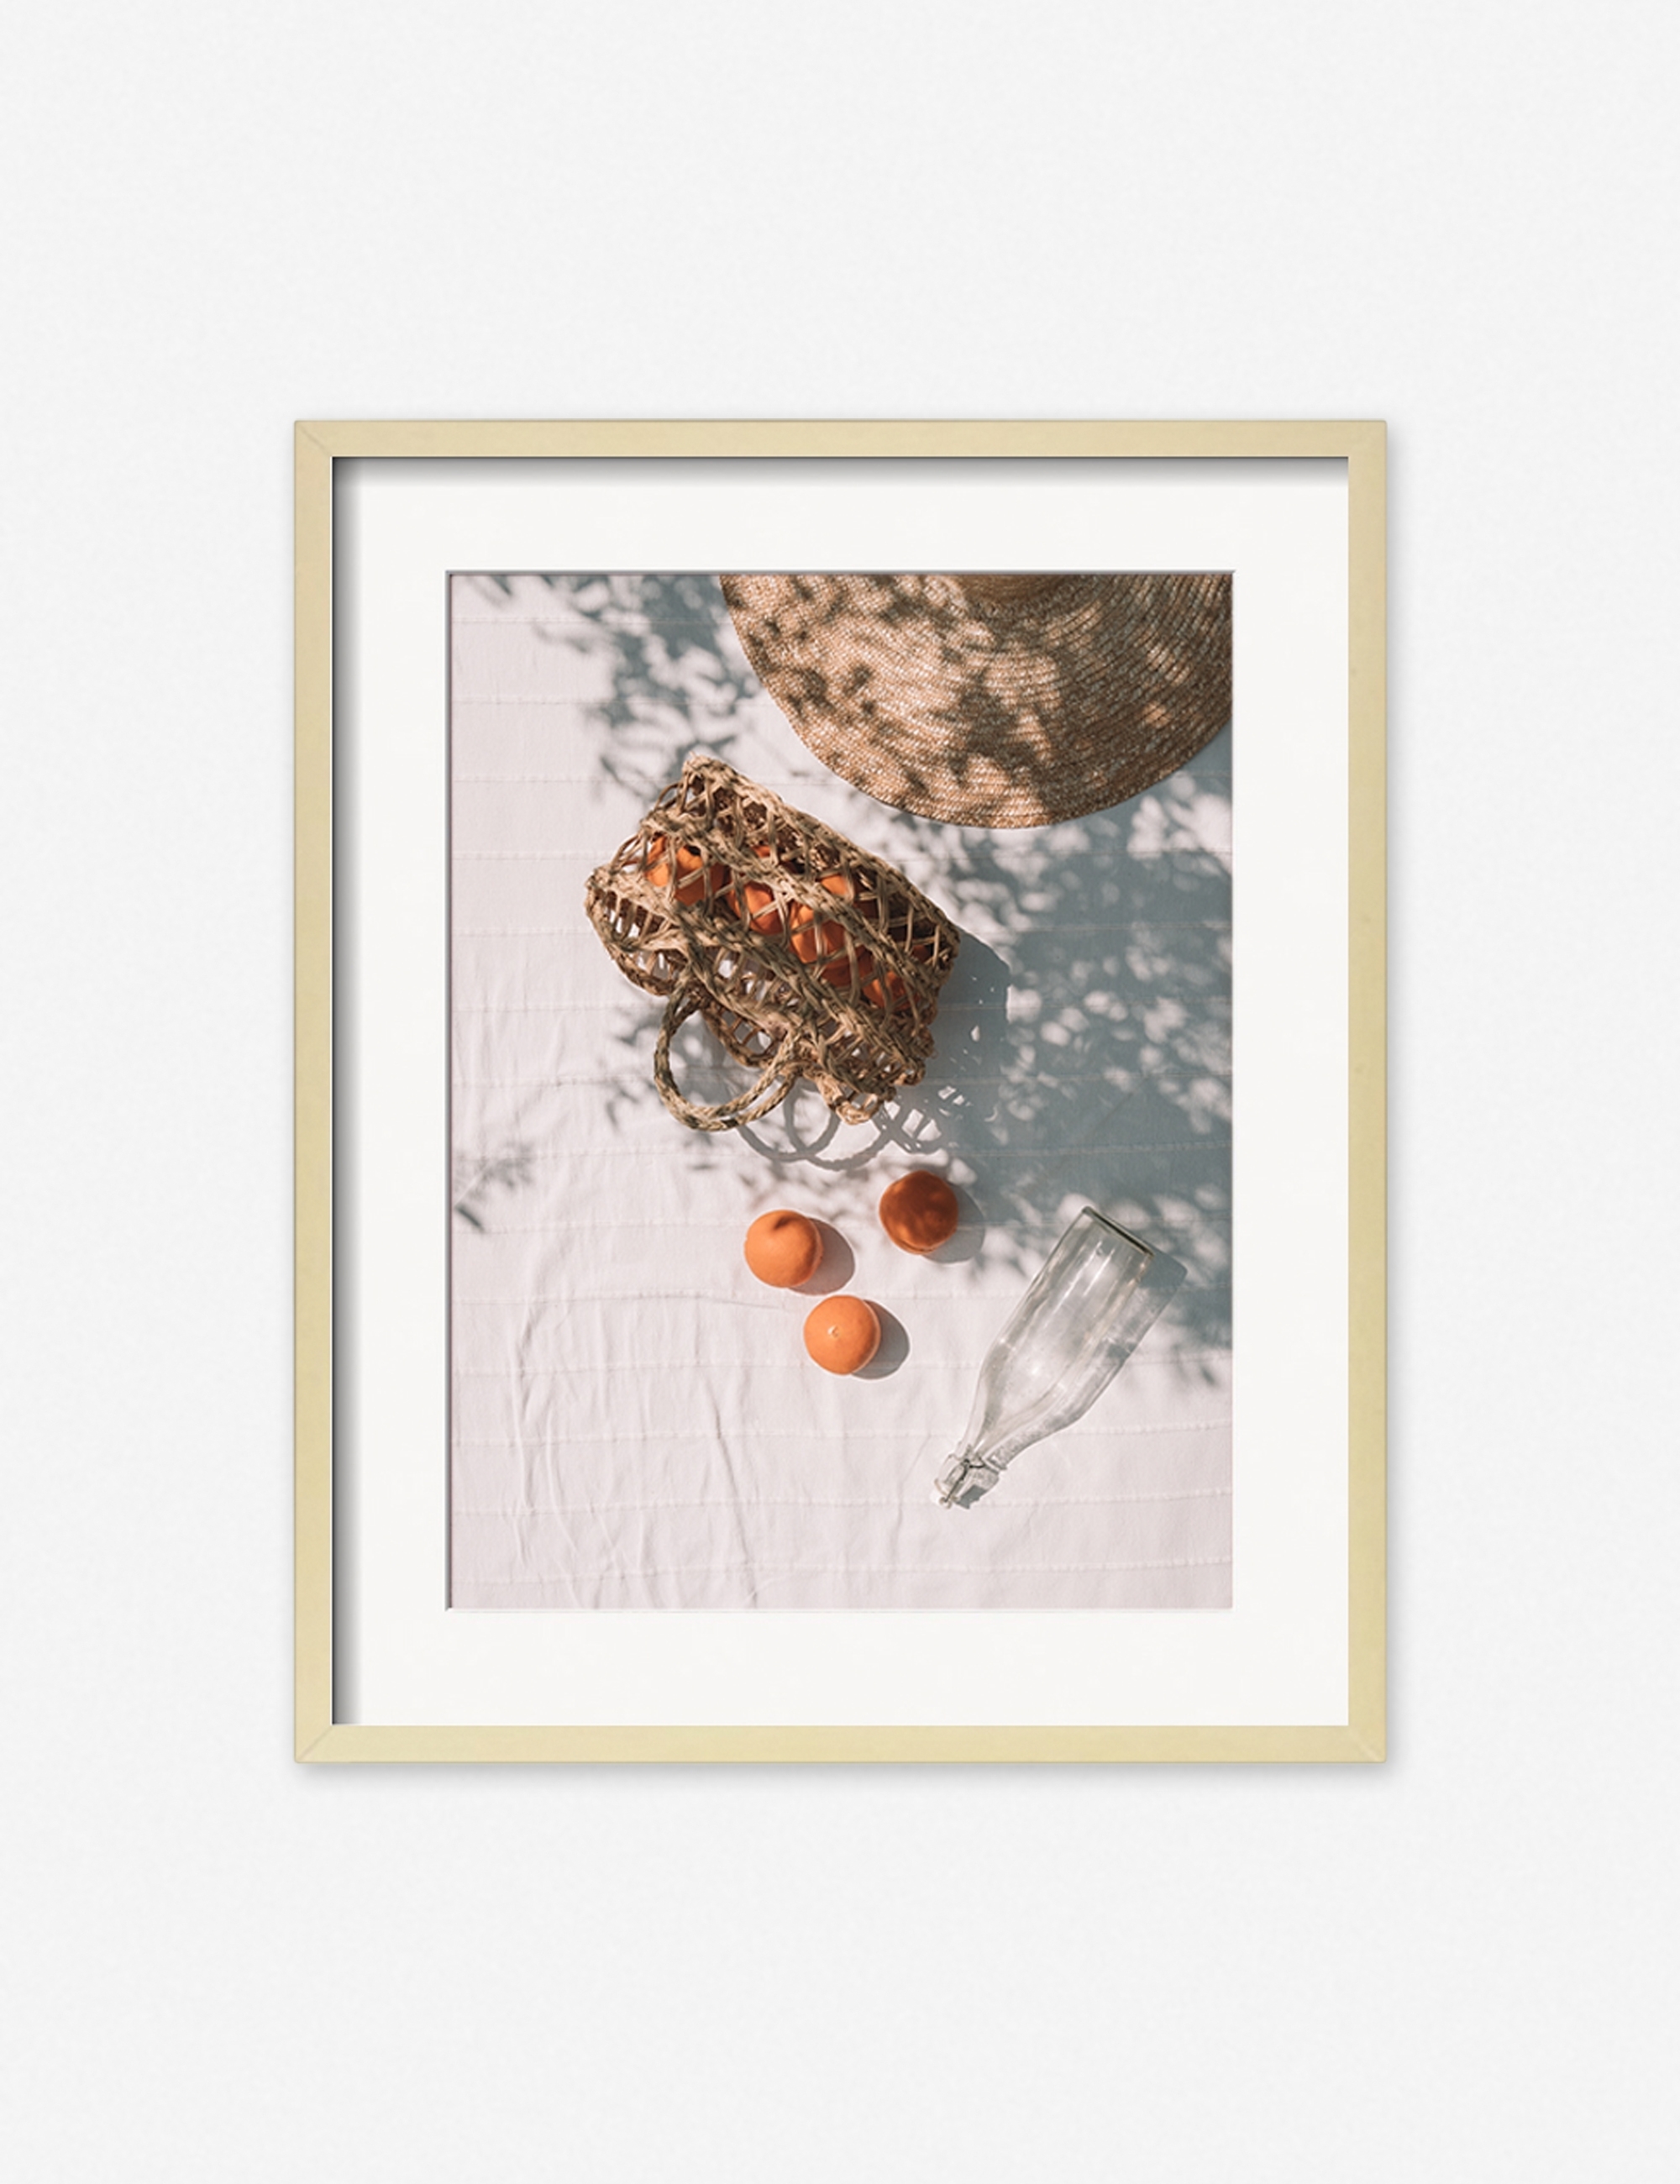 Siesta, By Carley Rudd 30.5" x 36.5" Framed - White - Image 5